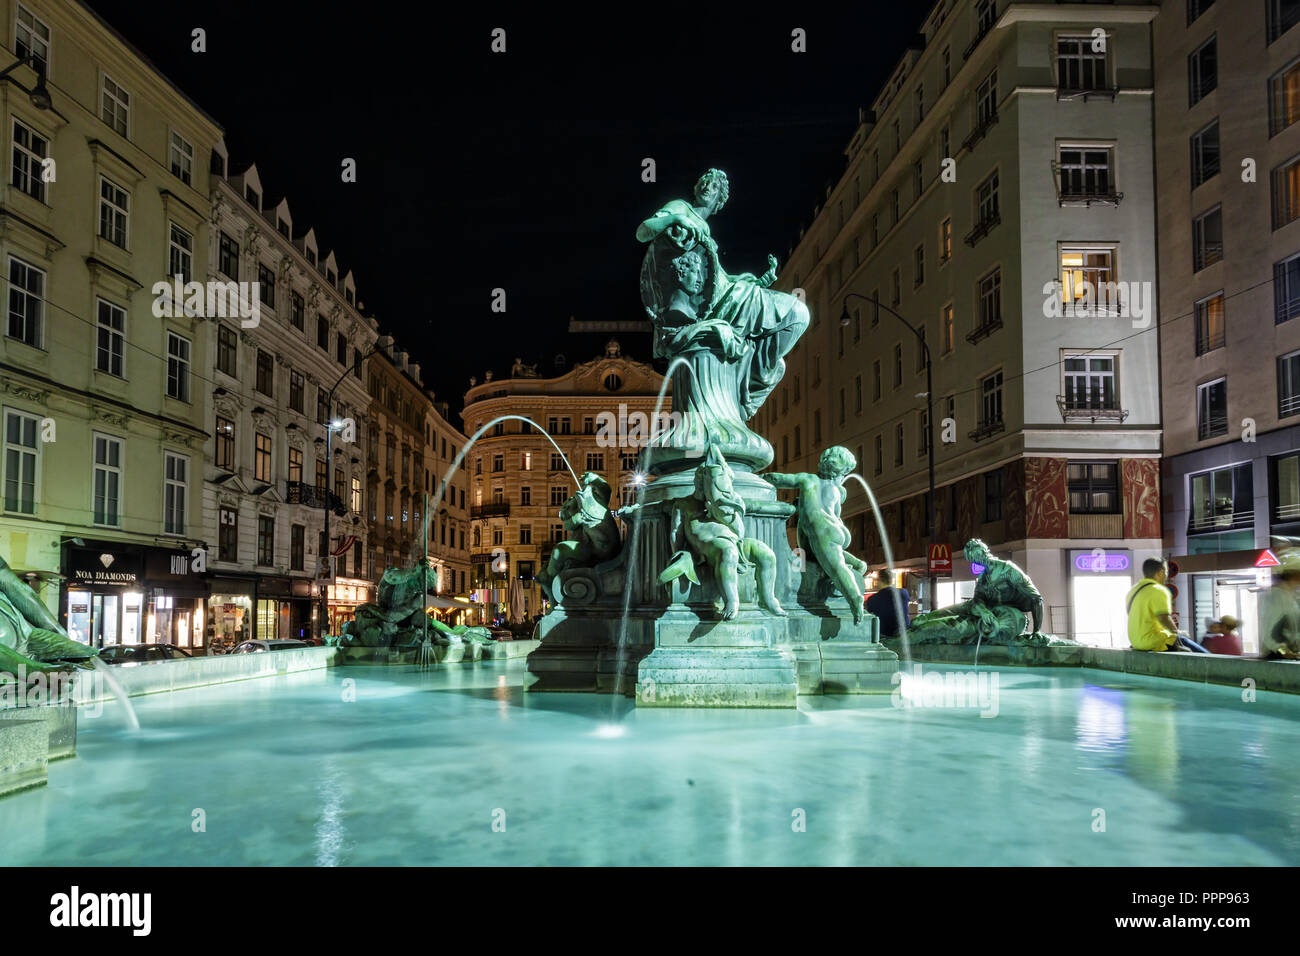 VIENNA, AUSTRIA - JULY 12 2015: Donnerbrunnen is a Baroque fountain in central Vienna of the Neuer Markt square Stock Photo